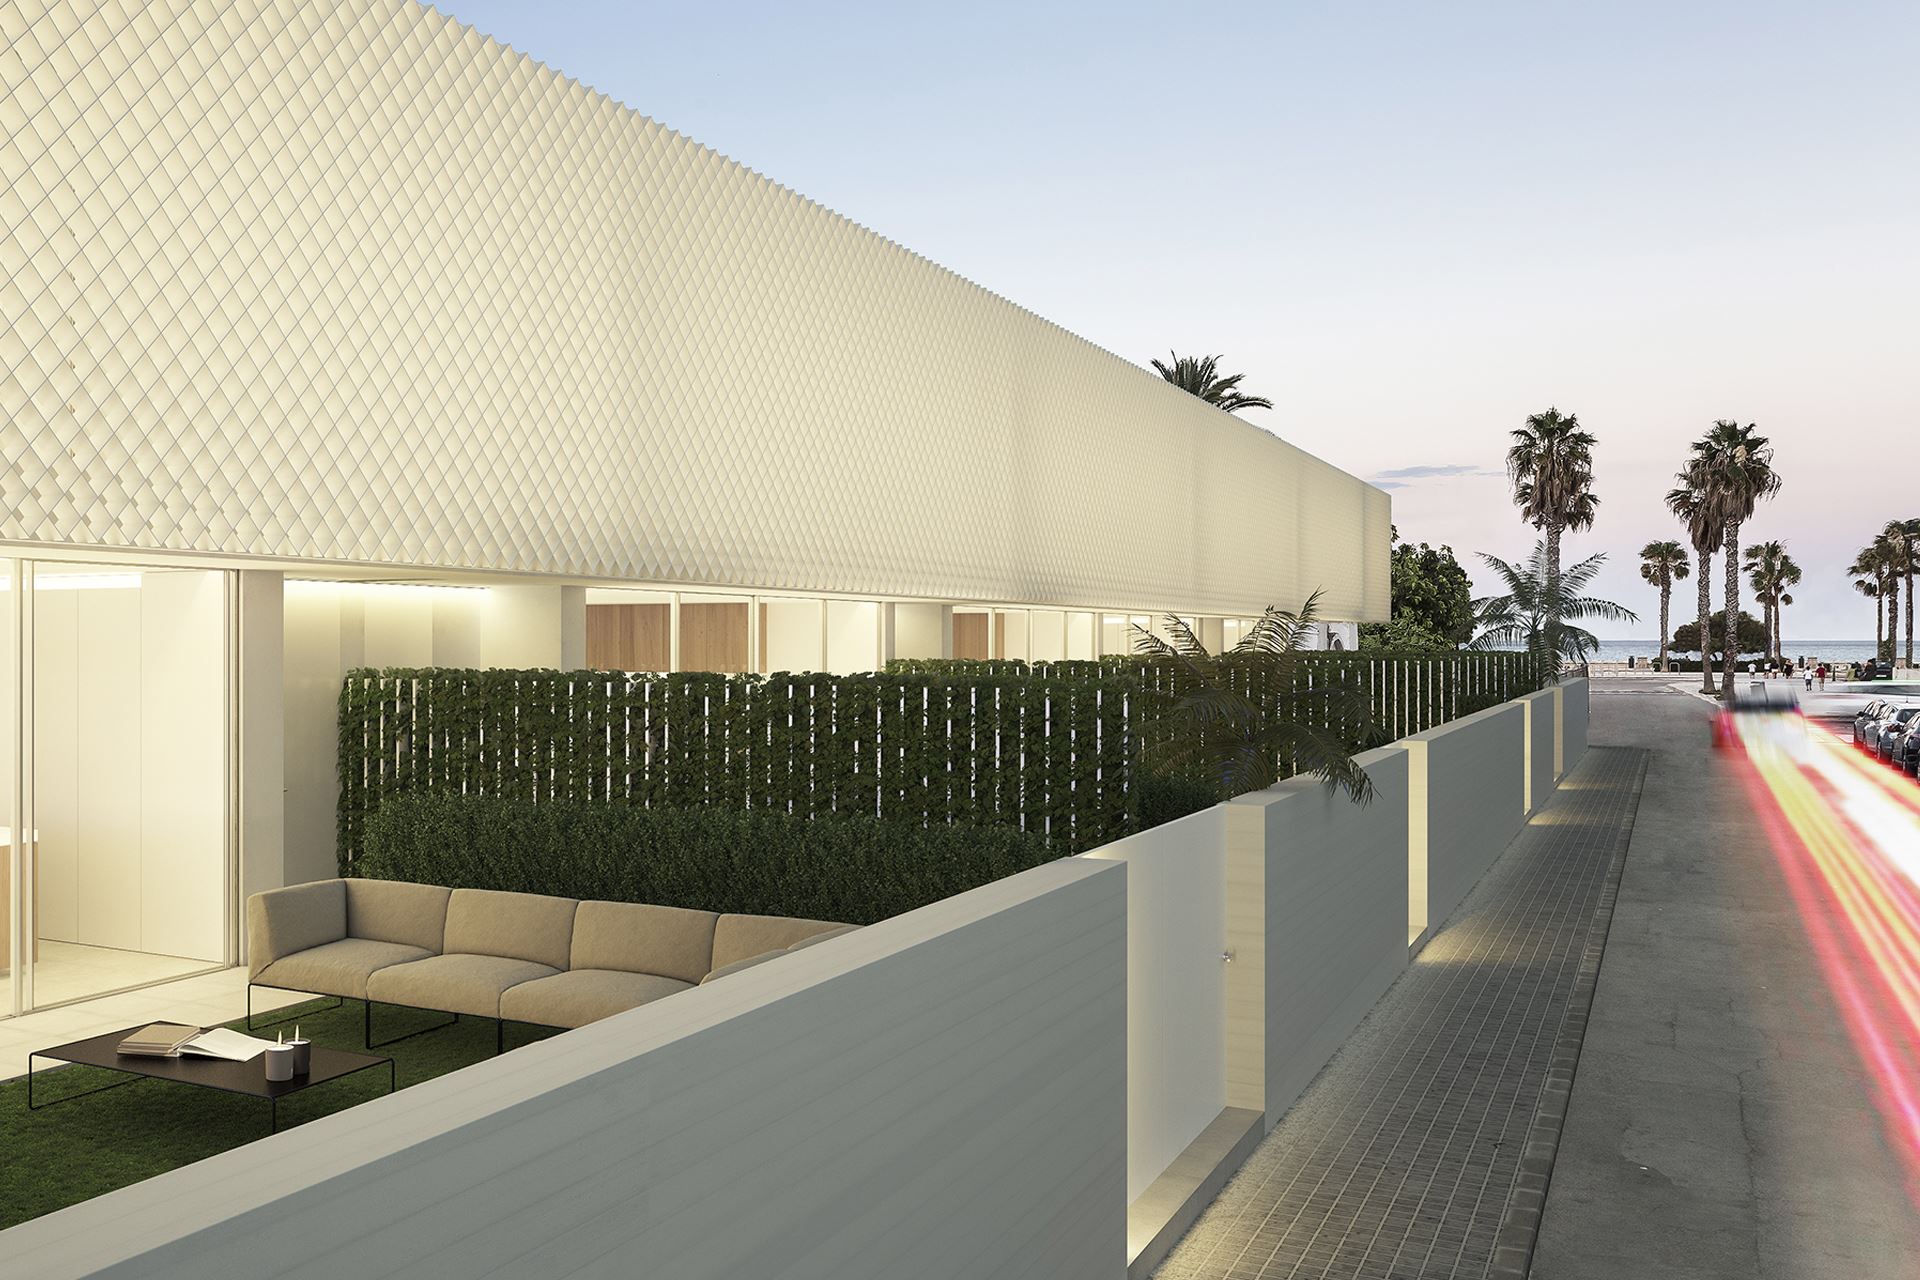 Terraced Houses project in La Malvarrosa - Gallardo Llopis Architects